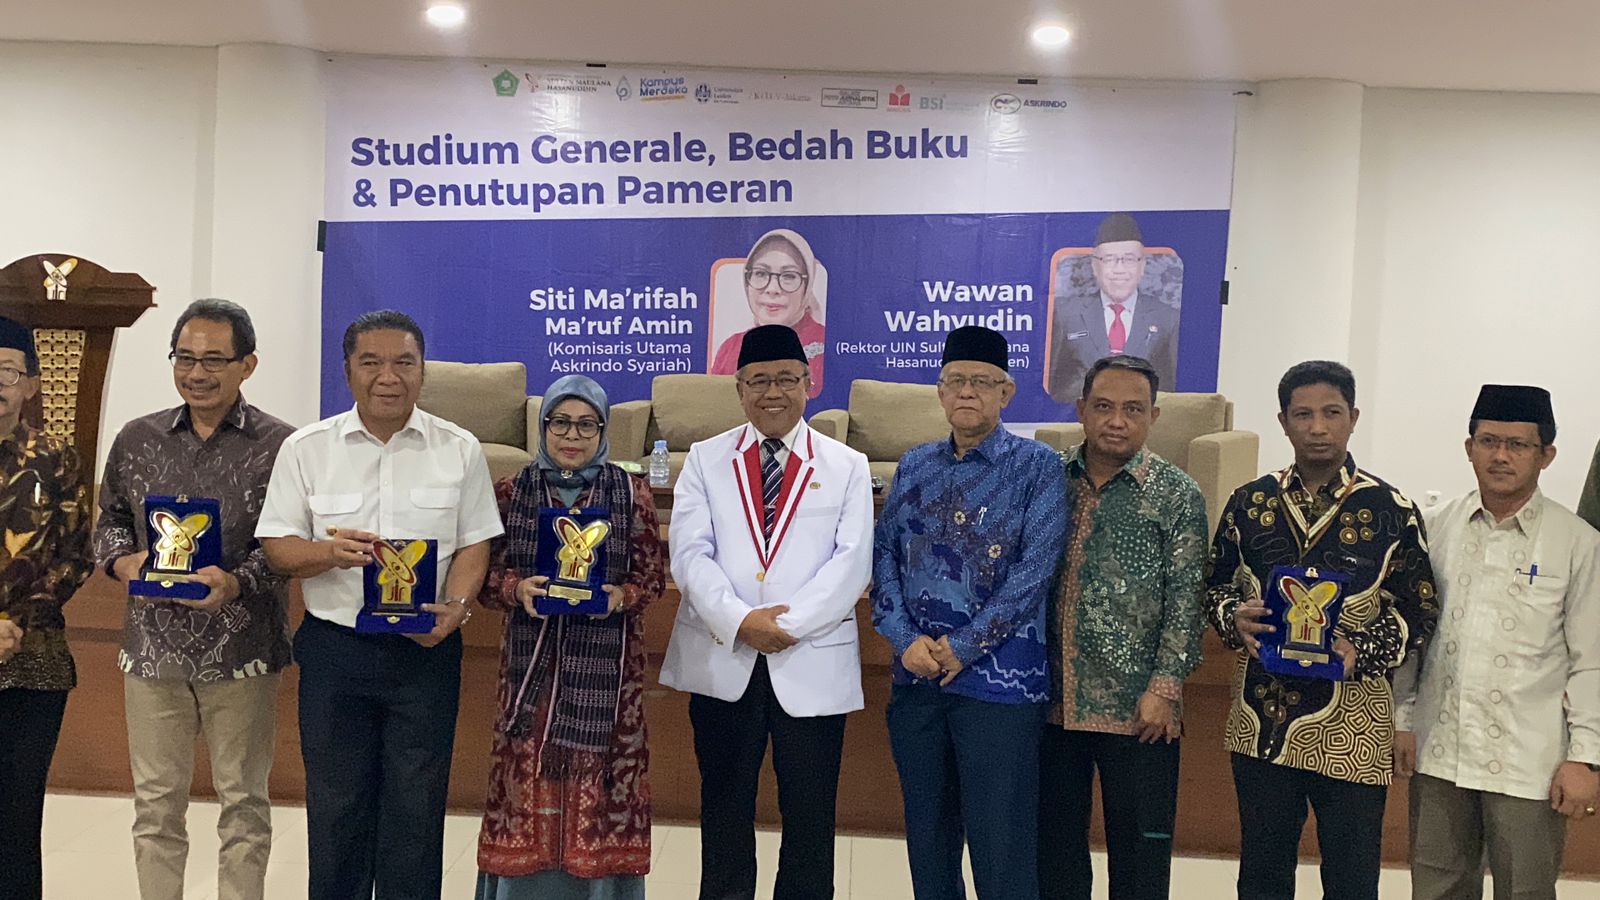 UIN SMH Banten Dukung Penguatan Ekonomi Syariah di Banten